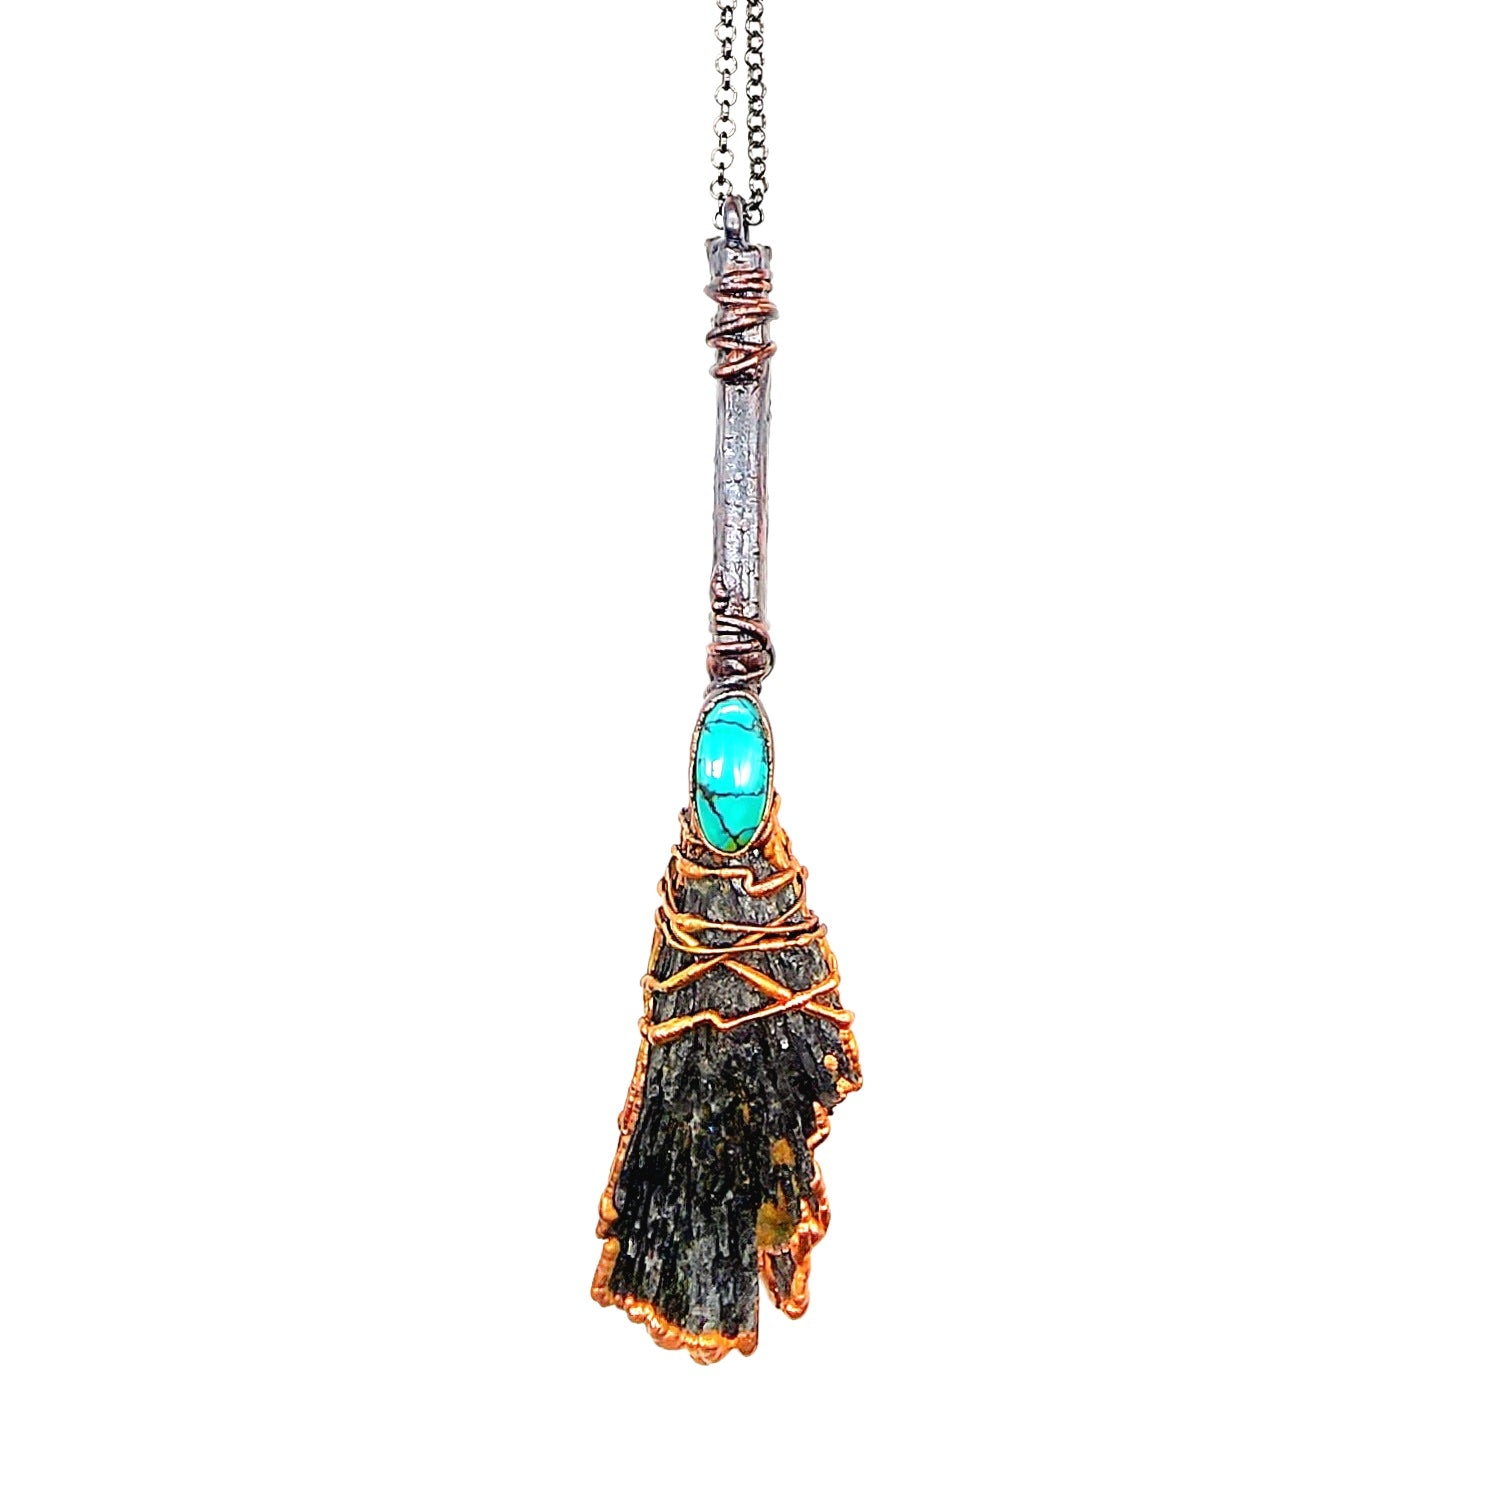 Black Kyanite Gemstone Broomstick Necklace - Antique Copper